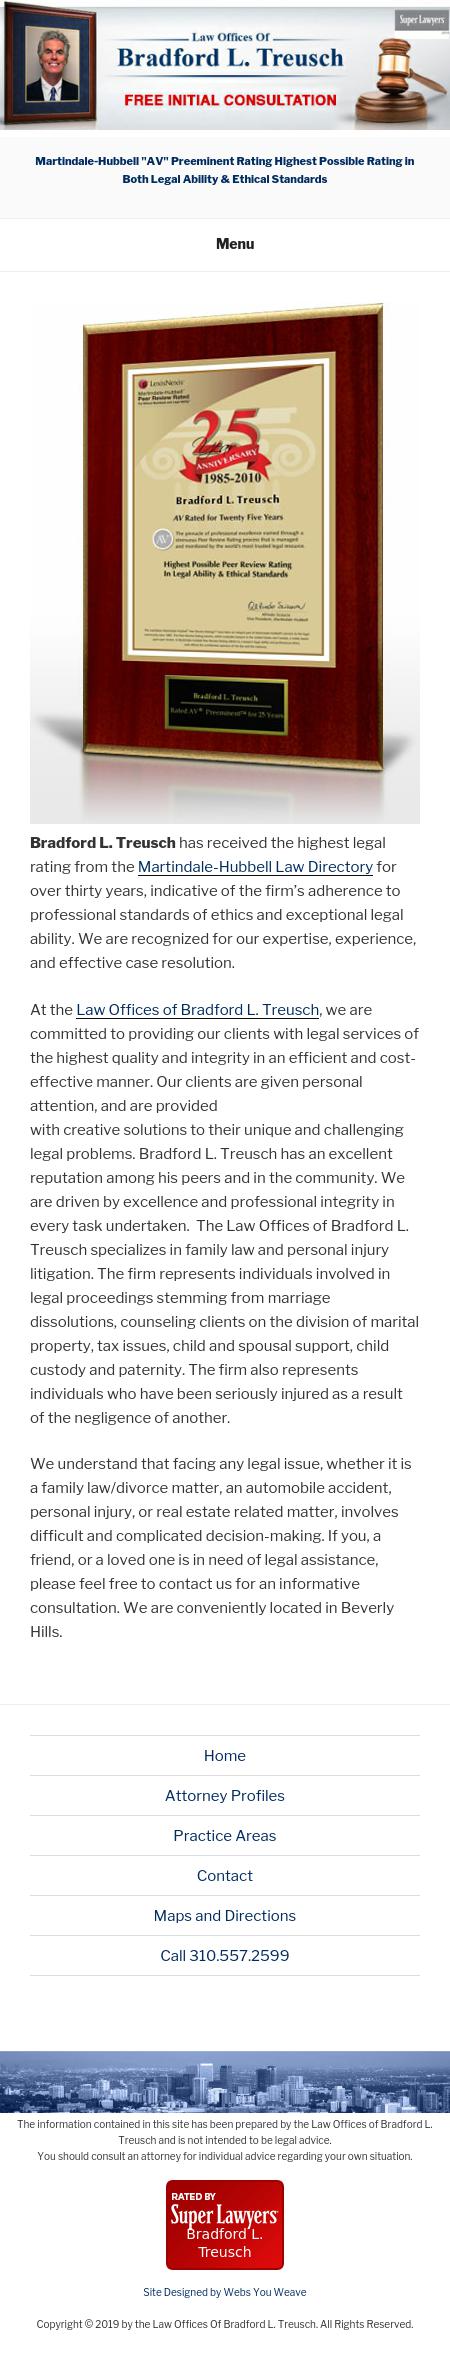 Bradford L. Treusch Law Offices - Los Angeles CA Lawyers